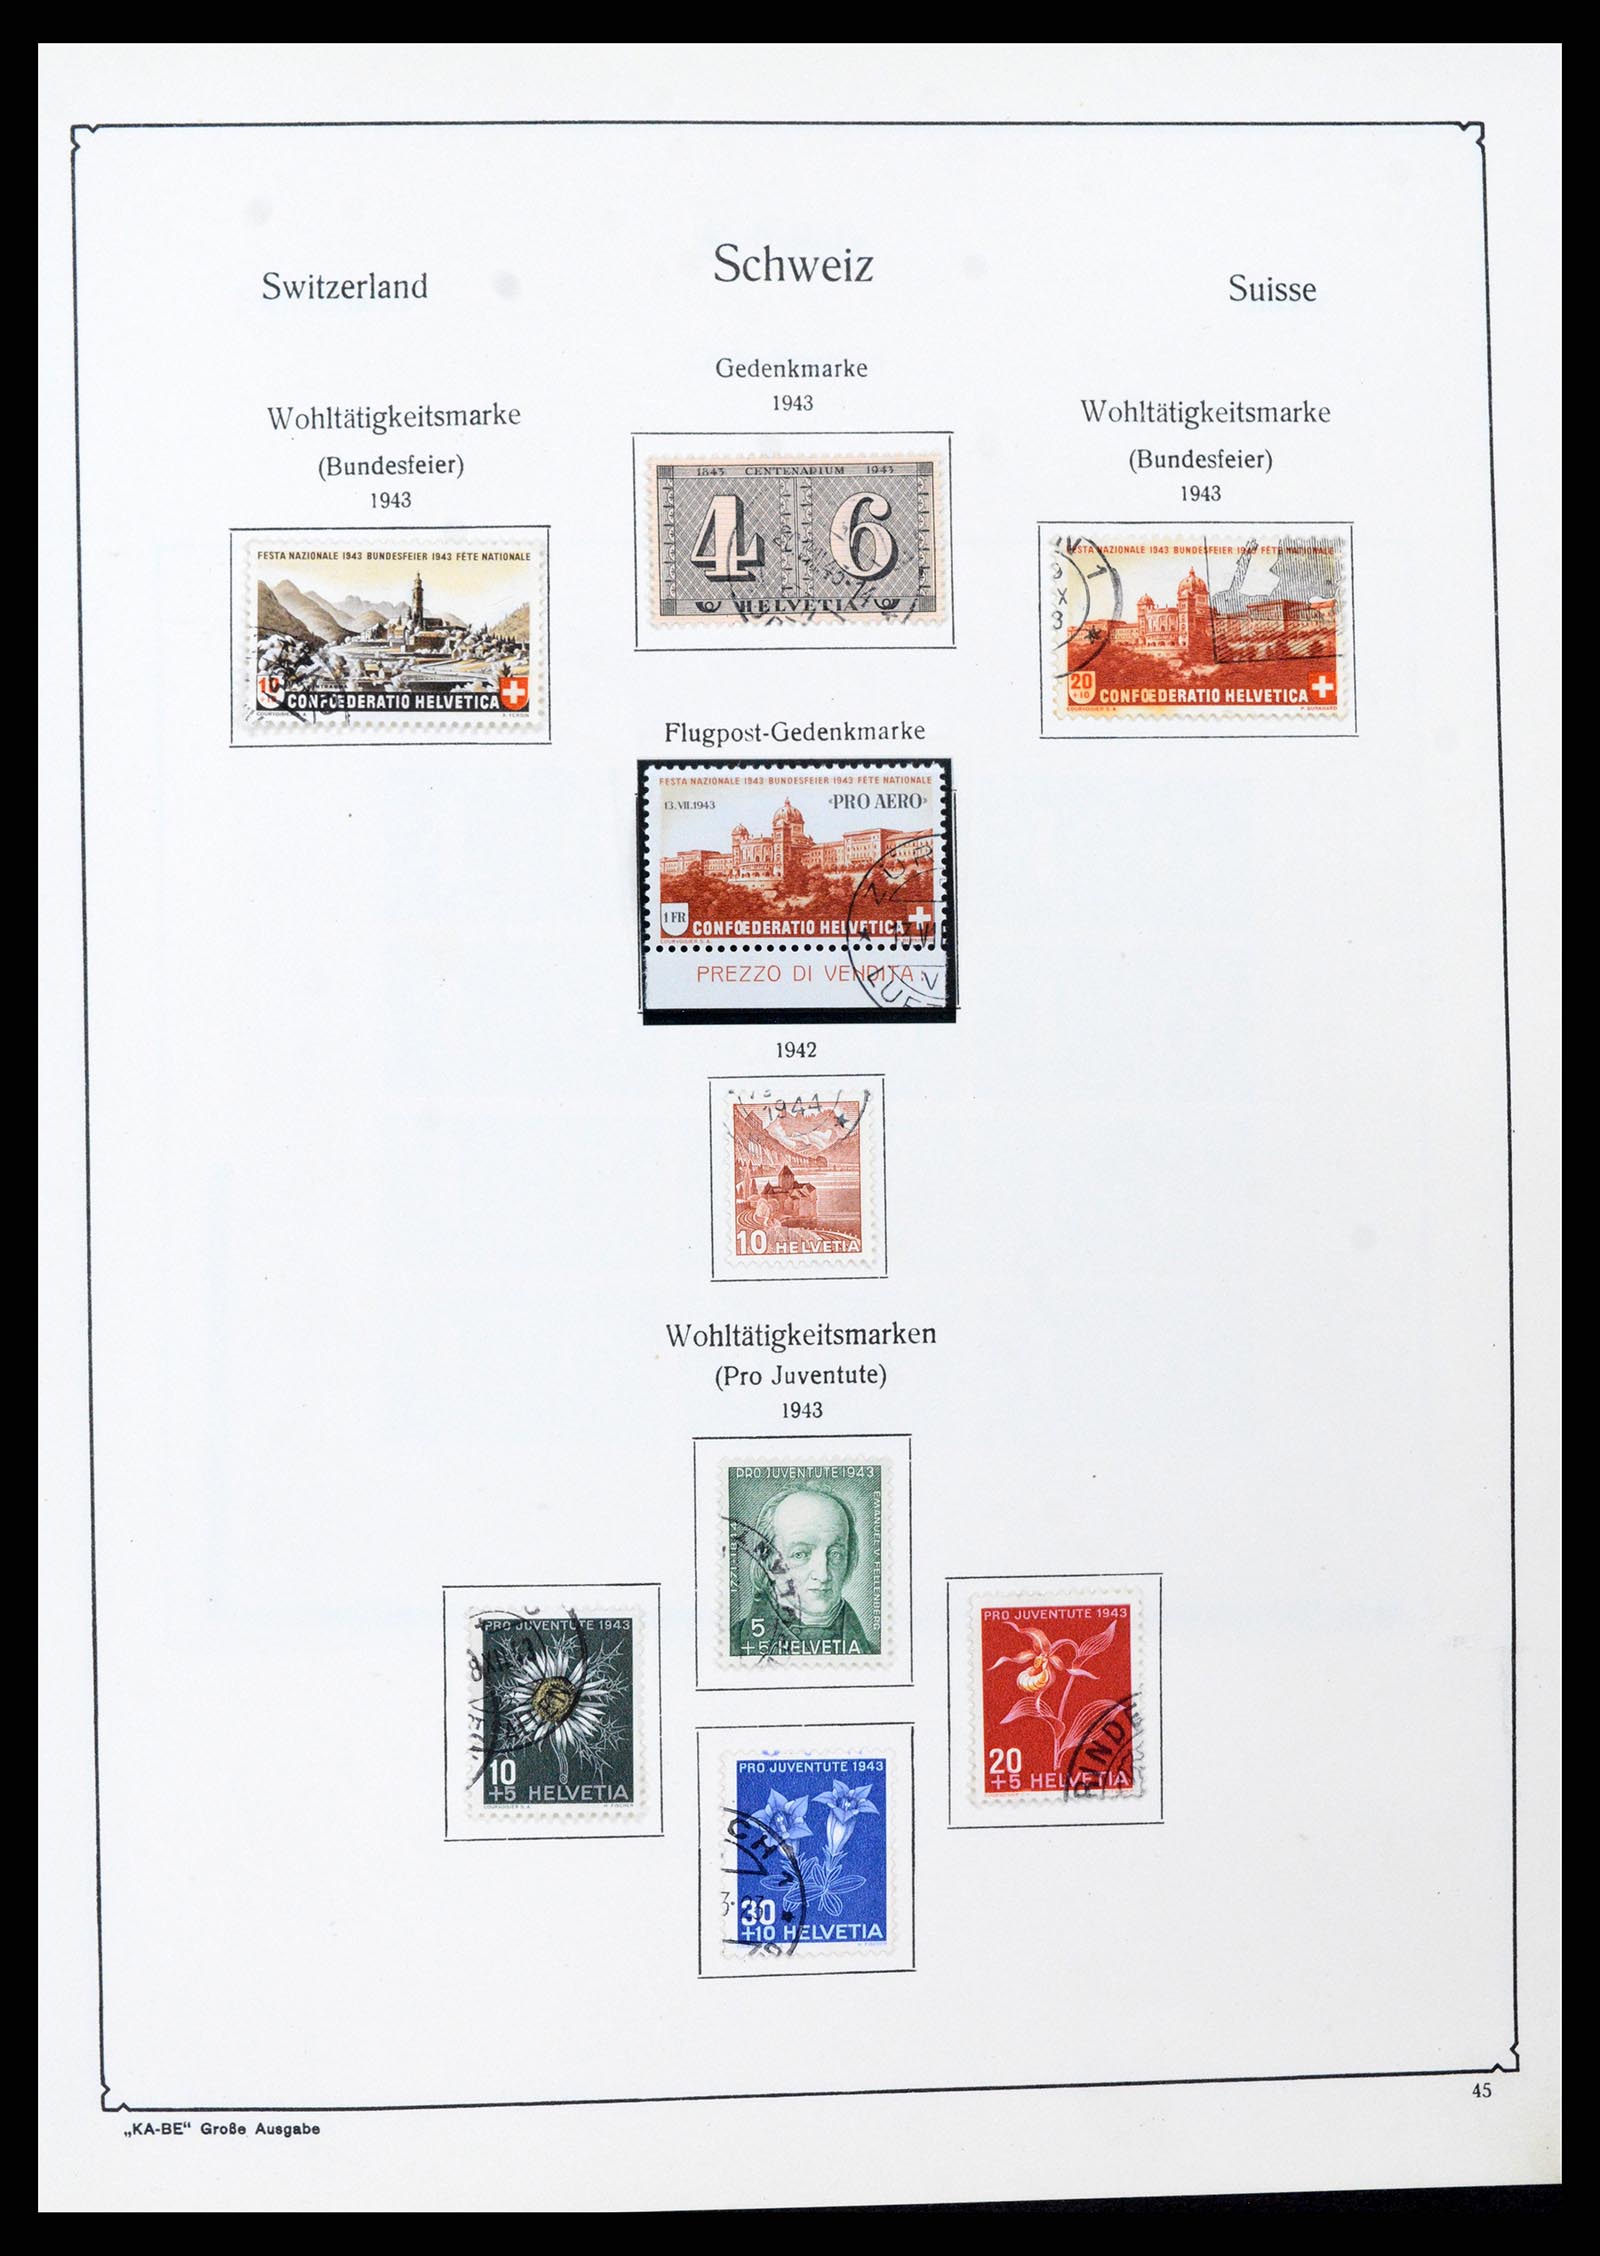 37588 043 - Stamp collection 37588 Switzerland 1854-1974.